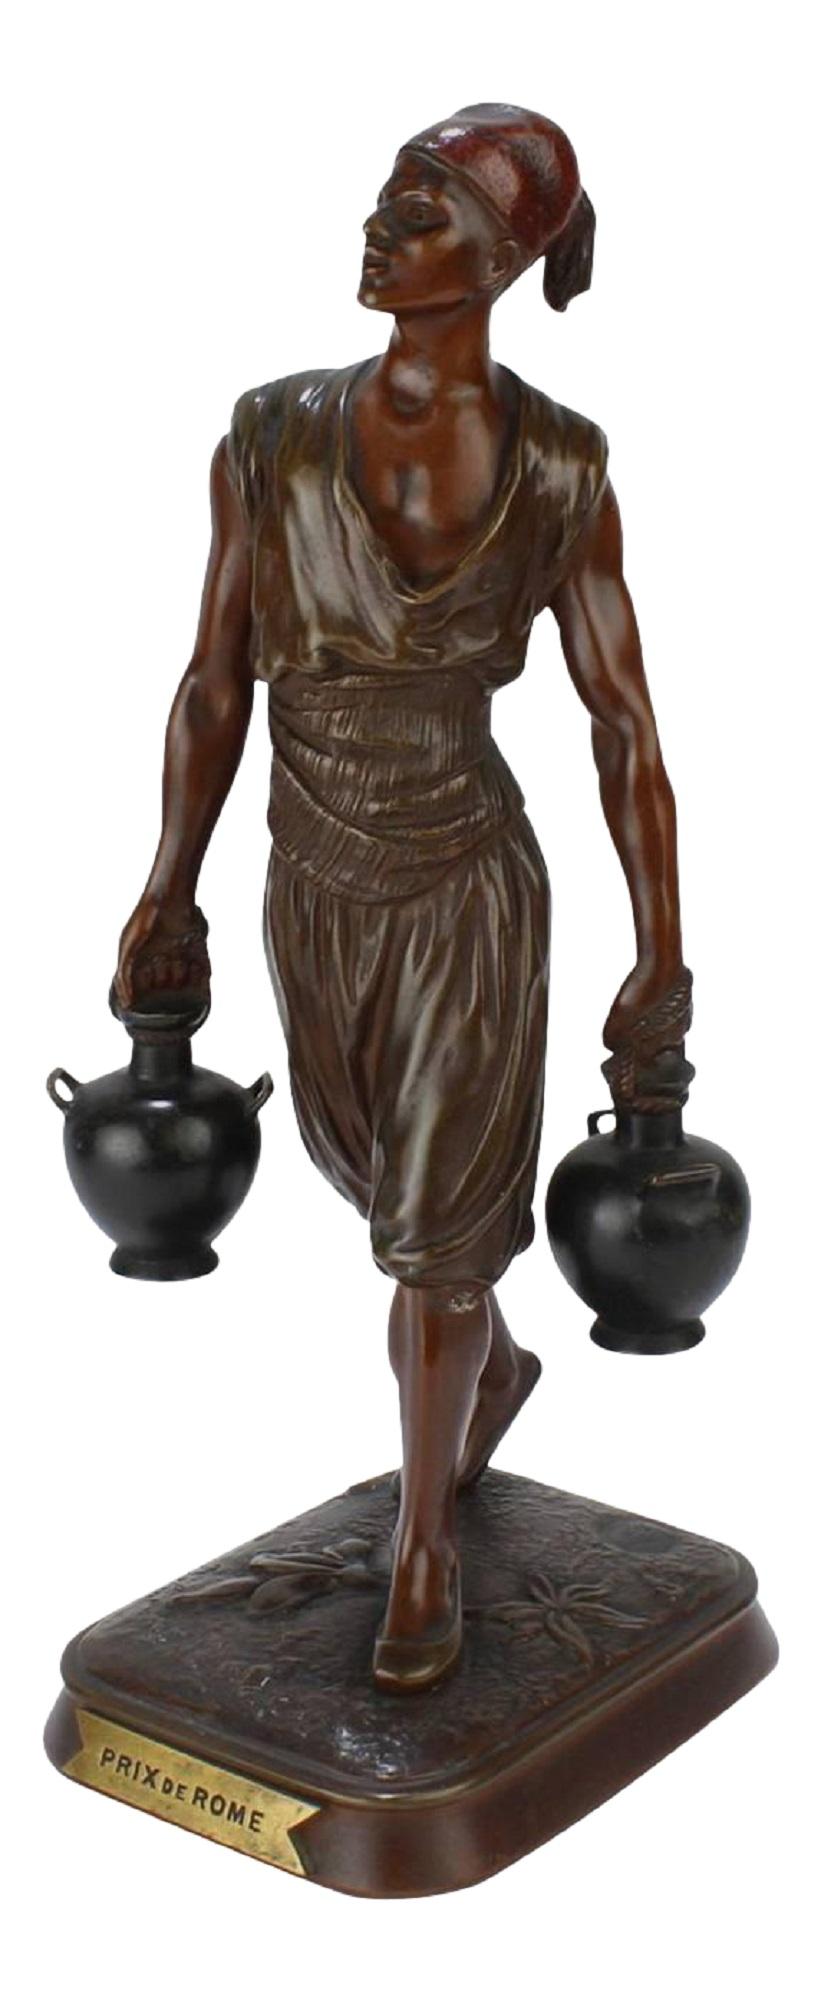 Marcel Debut Figurative Sculpture - French Orientalist Bronze Tunisian Water Carrier Sculpture by Jean-Didier Debut